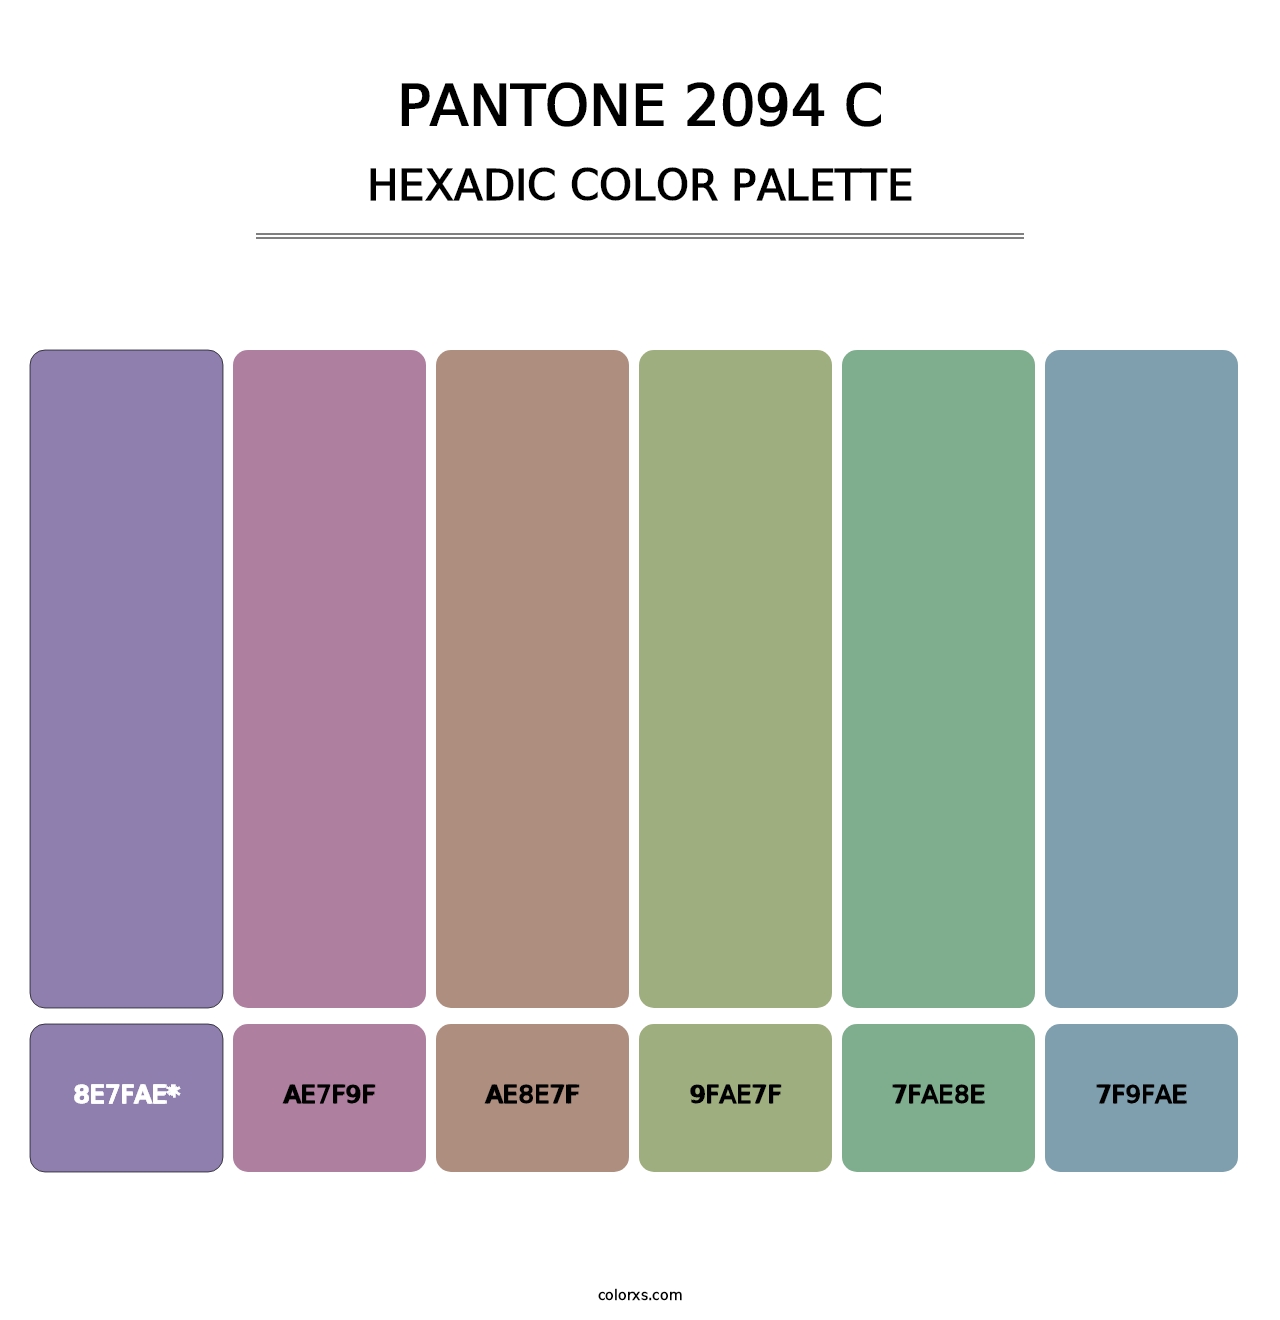 PANTONE 2094 C - Hexadic Color Palette